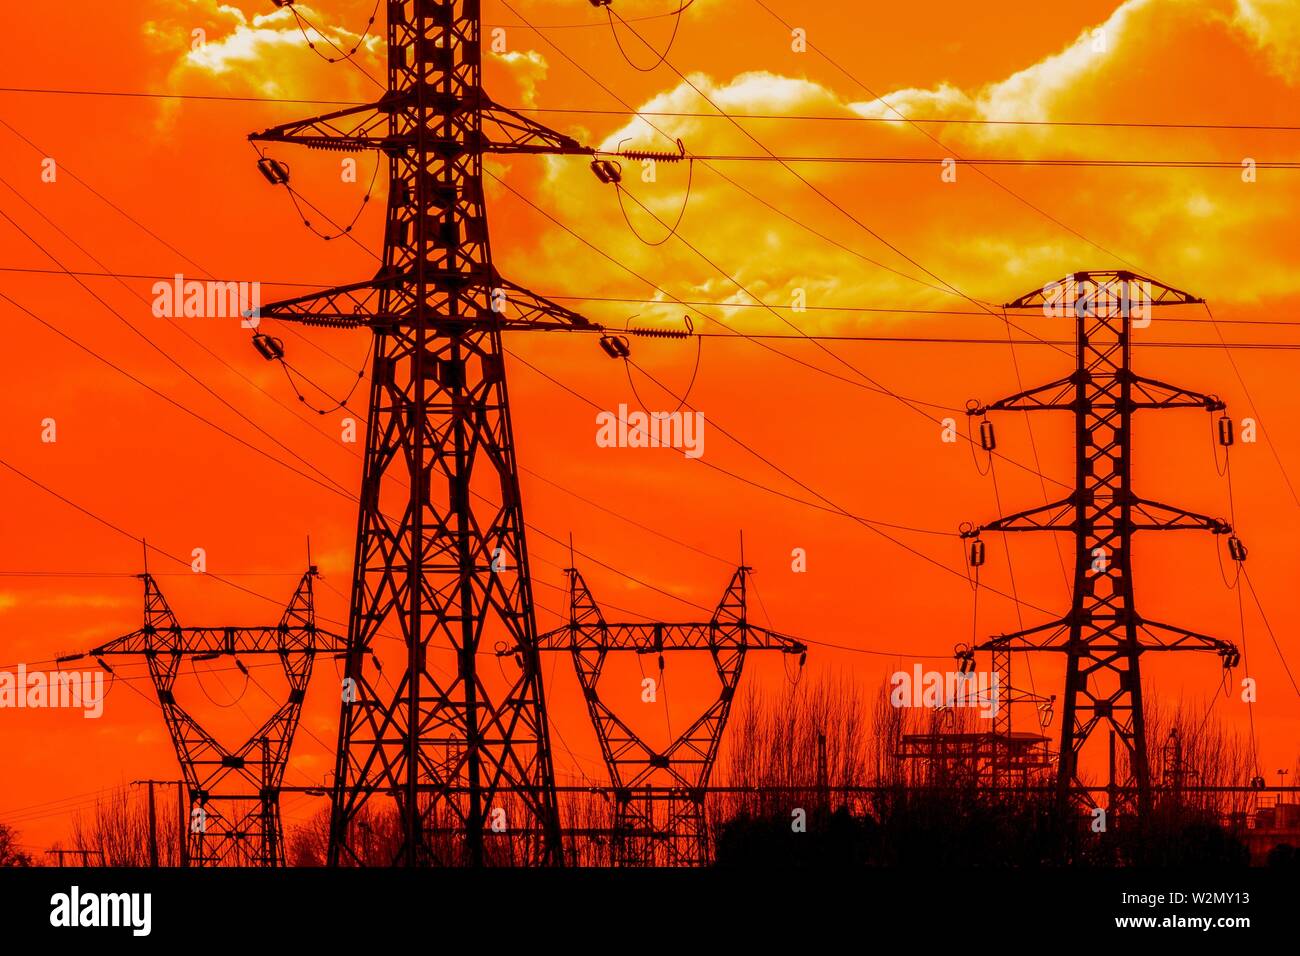 Electricity pylons at sunset, orange sky Stock Photo